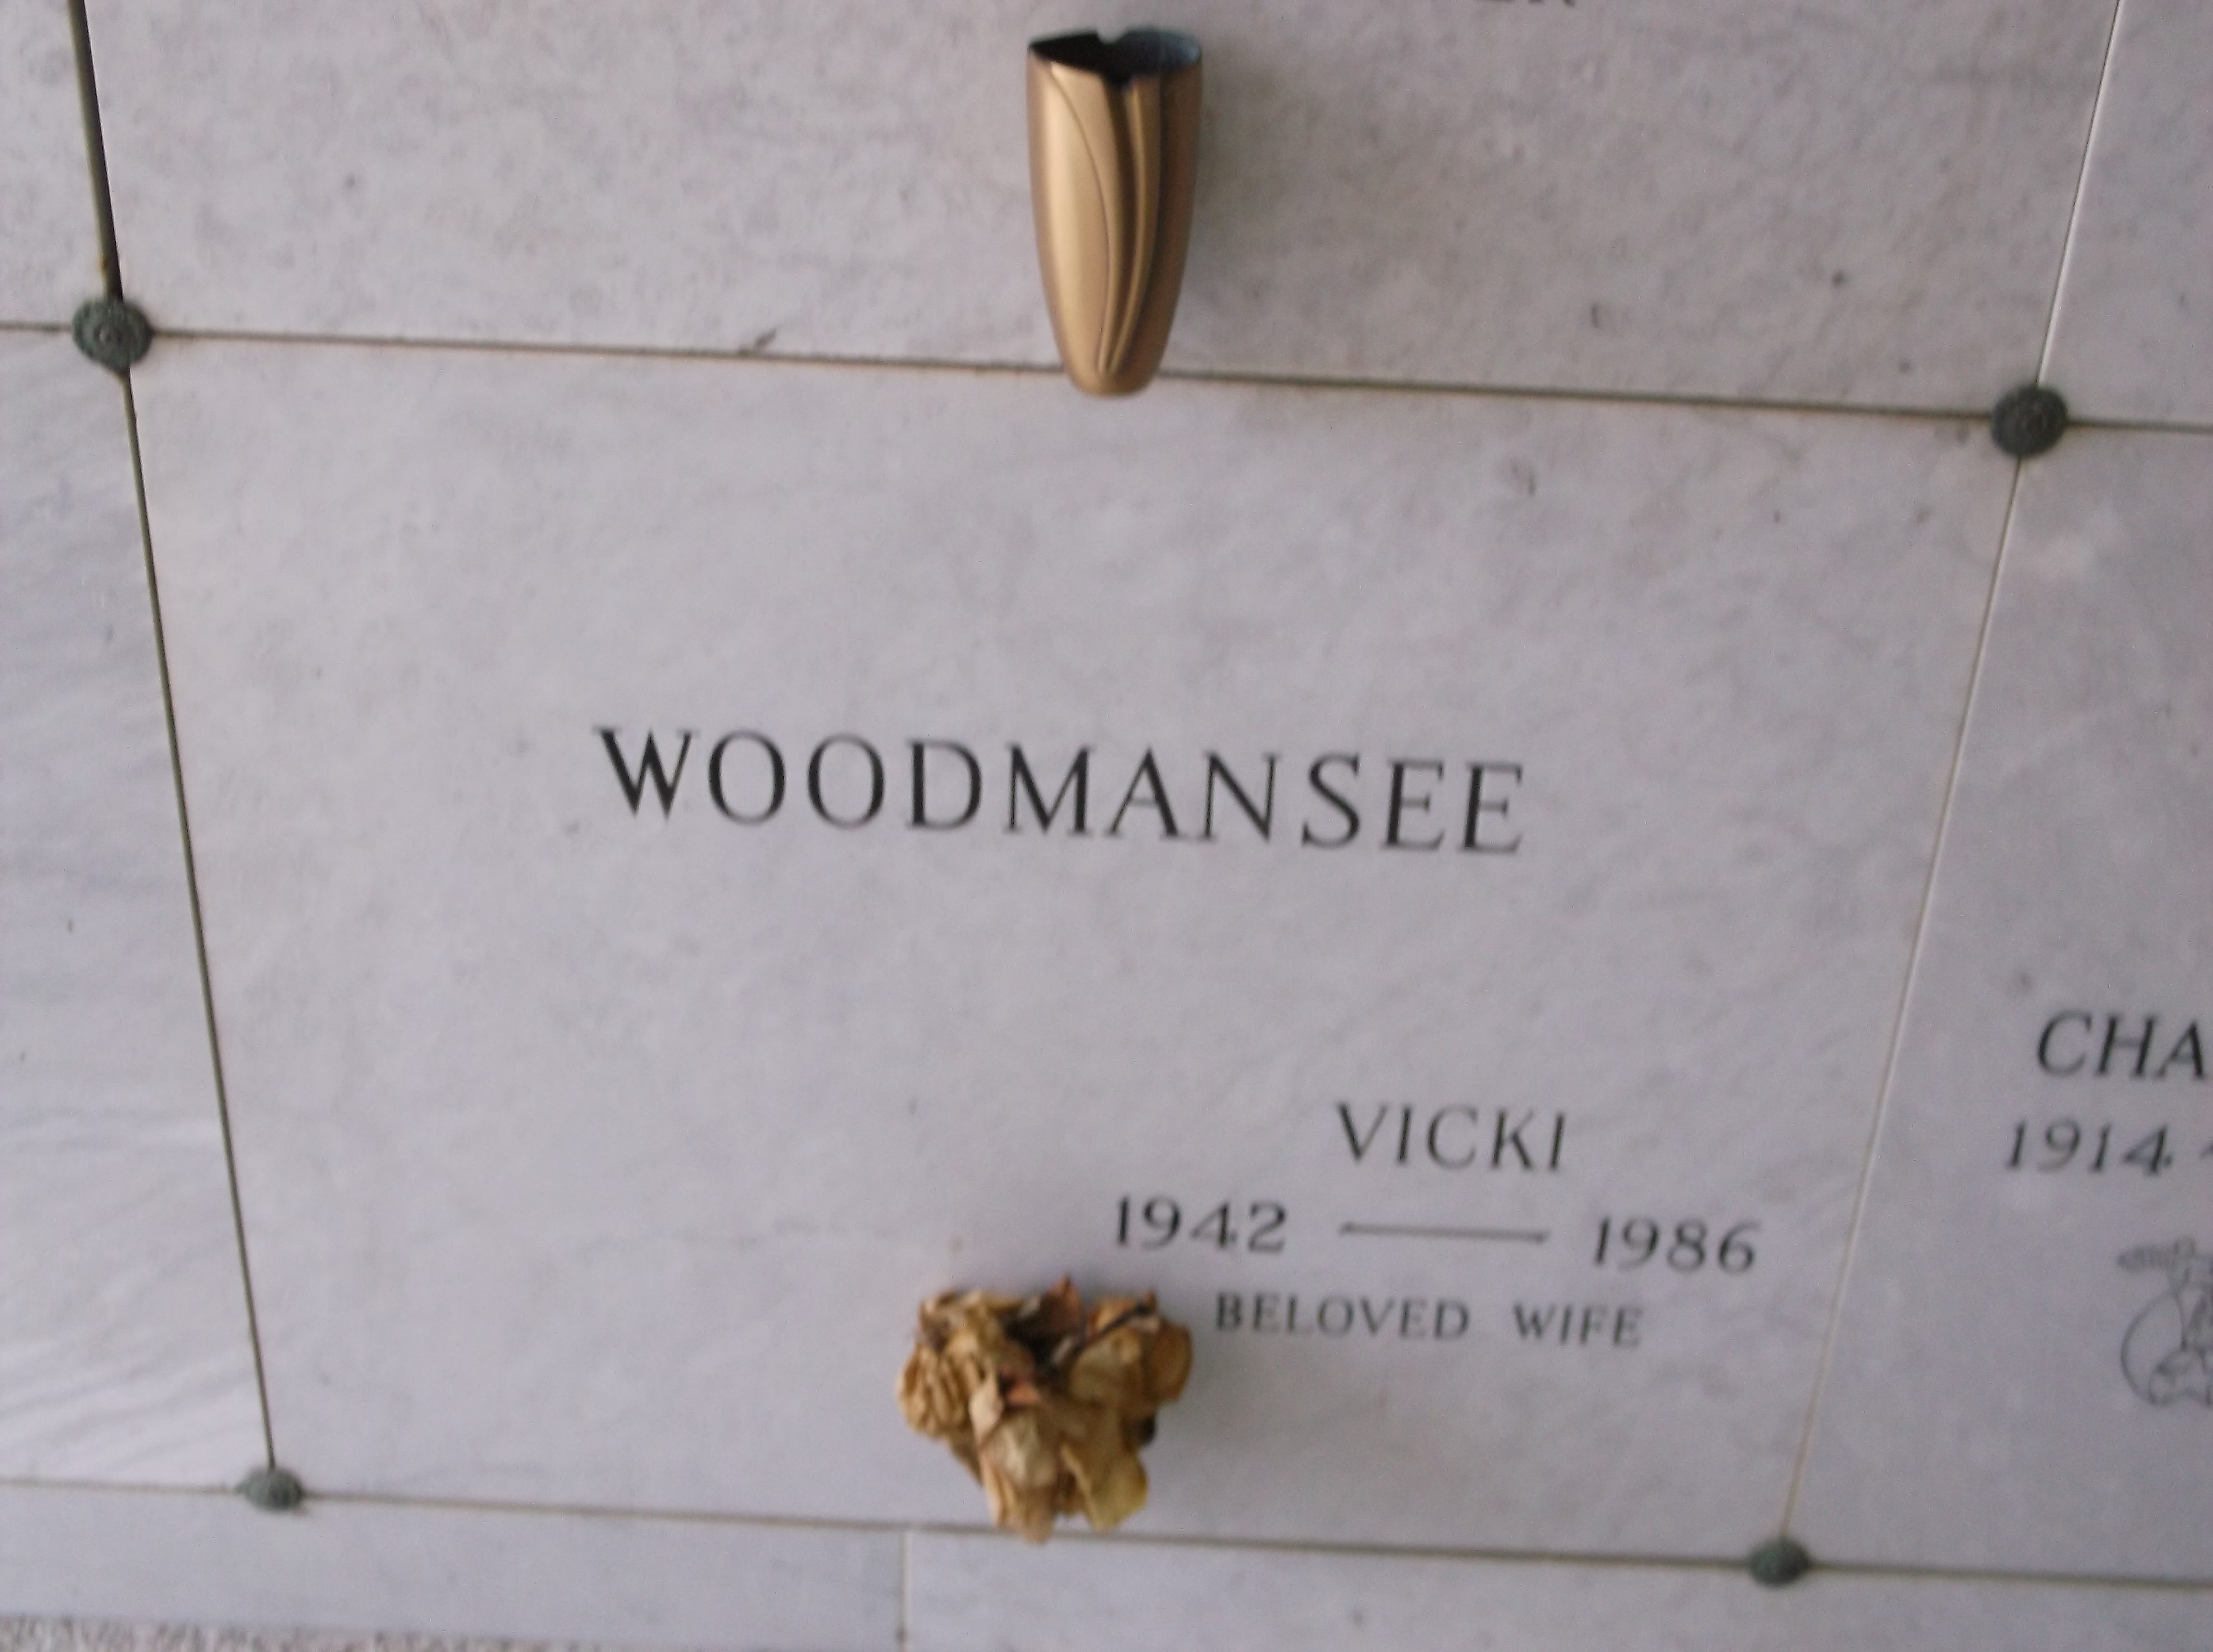 Vicki Woodmansee